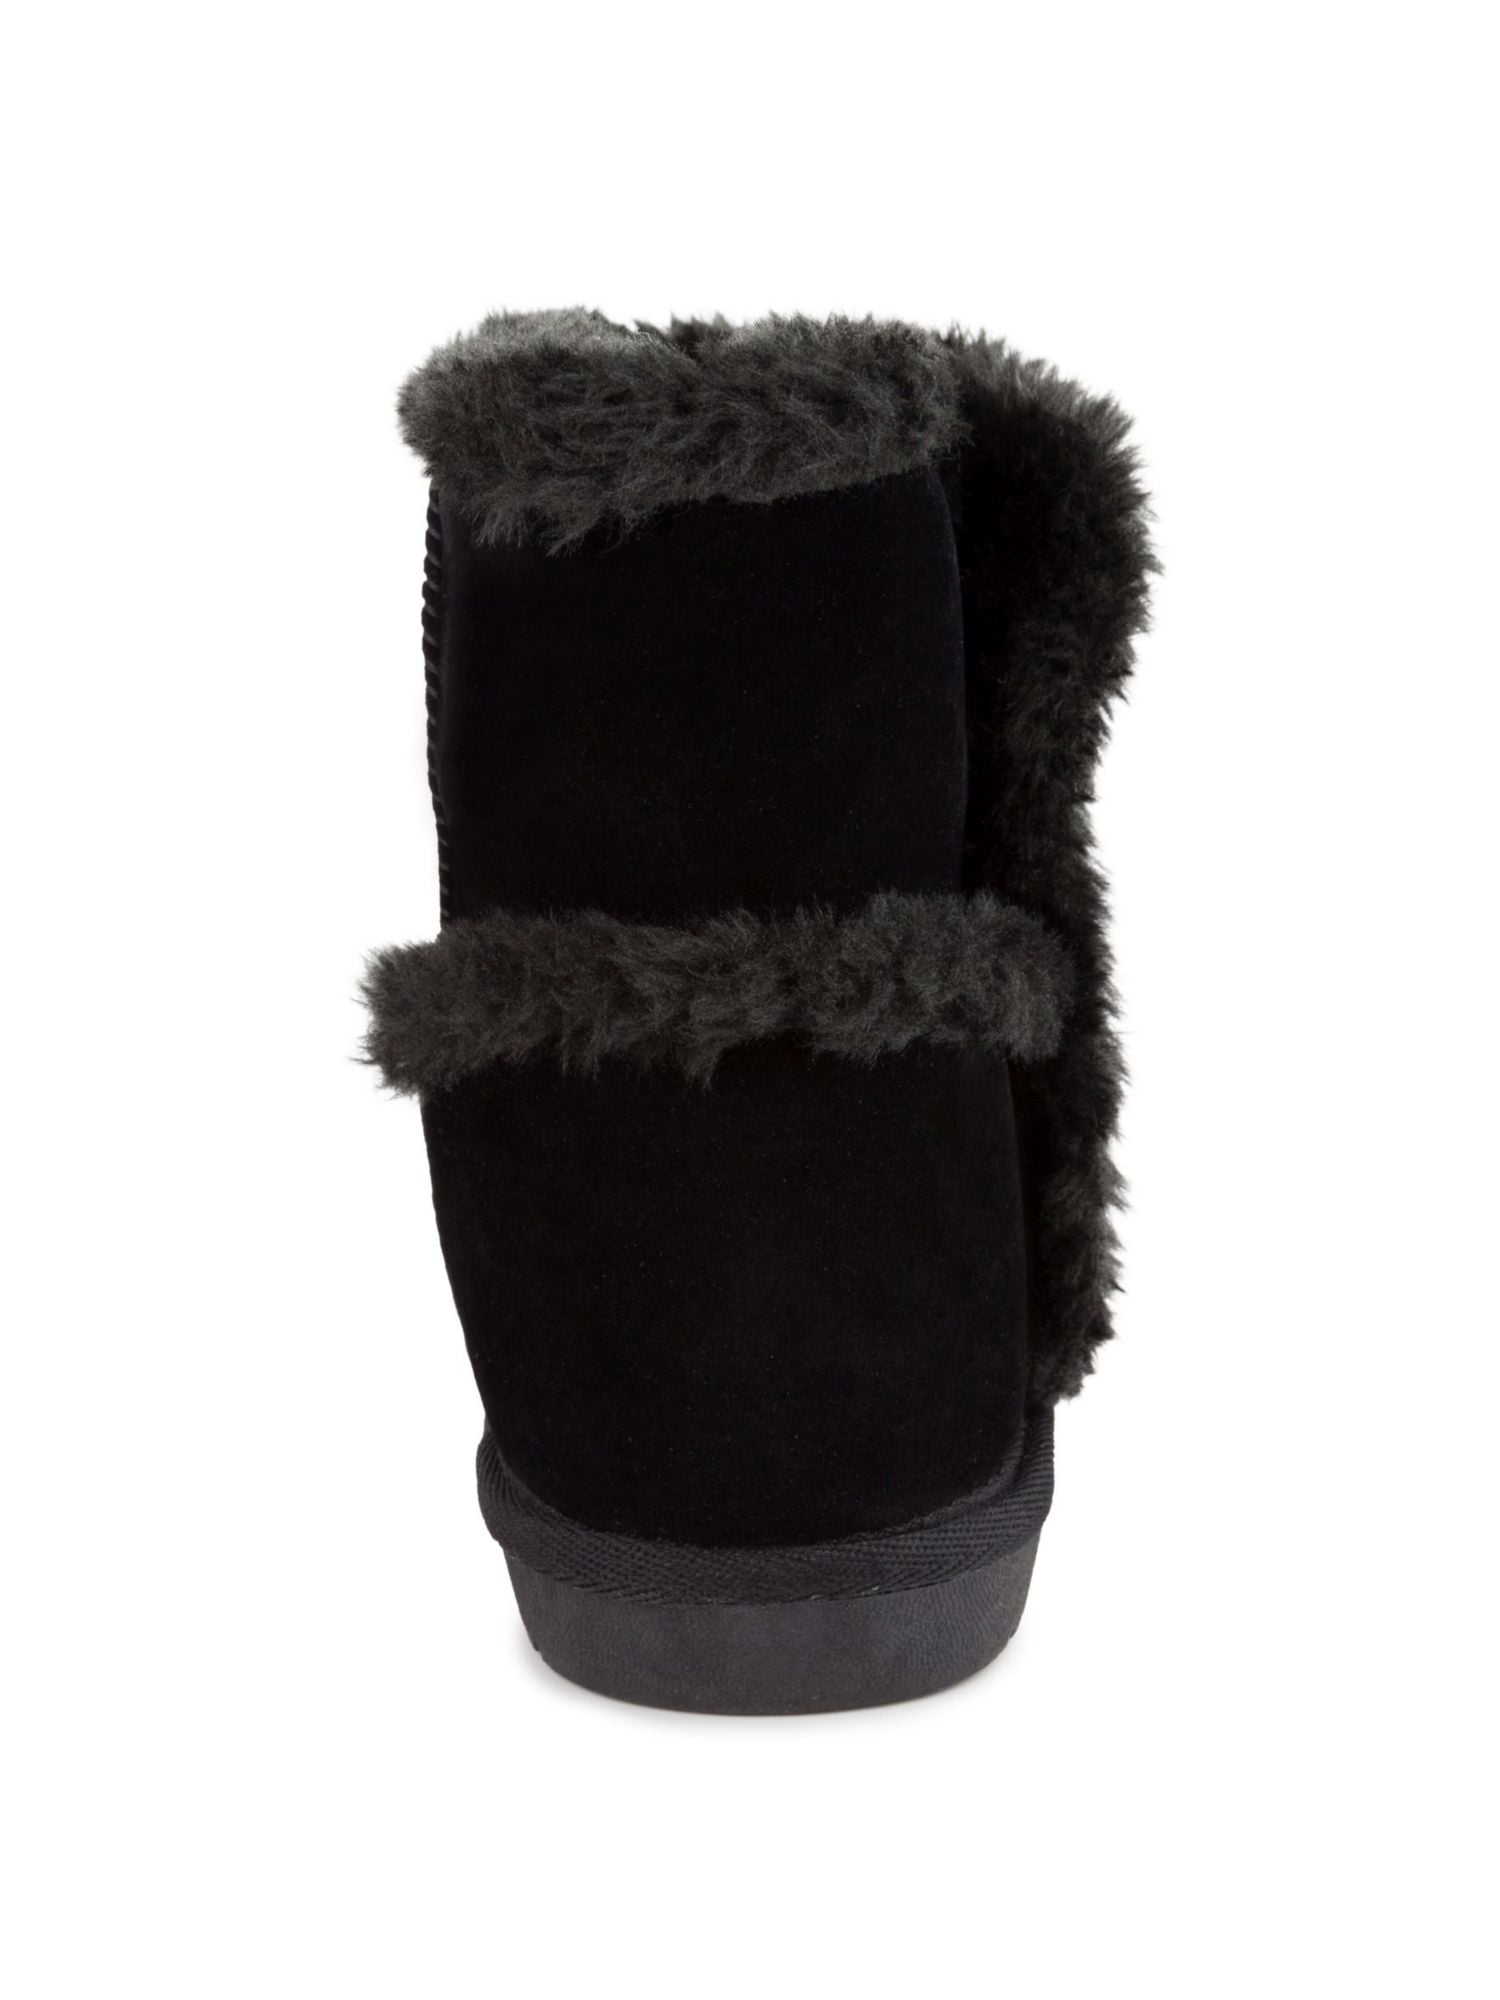 SUGAR Womens Black Comfort Poppy Round Toe Snow Boots 8 M